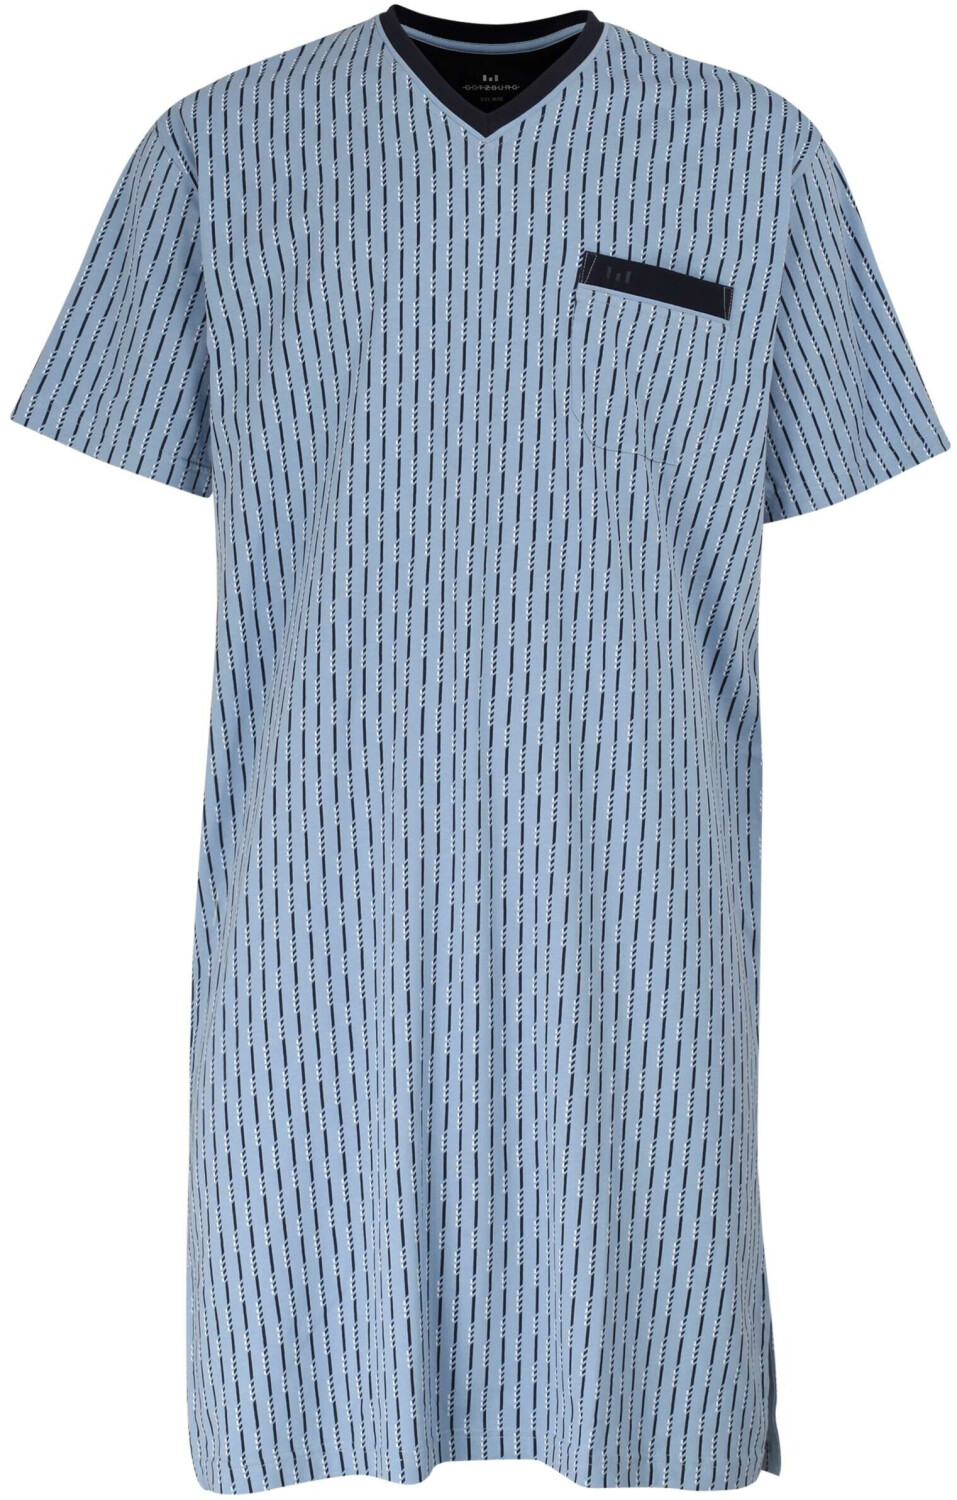 Götzburg Nachthemd (452014) blau ab 33,99 € | Preisvergleich bei